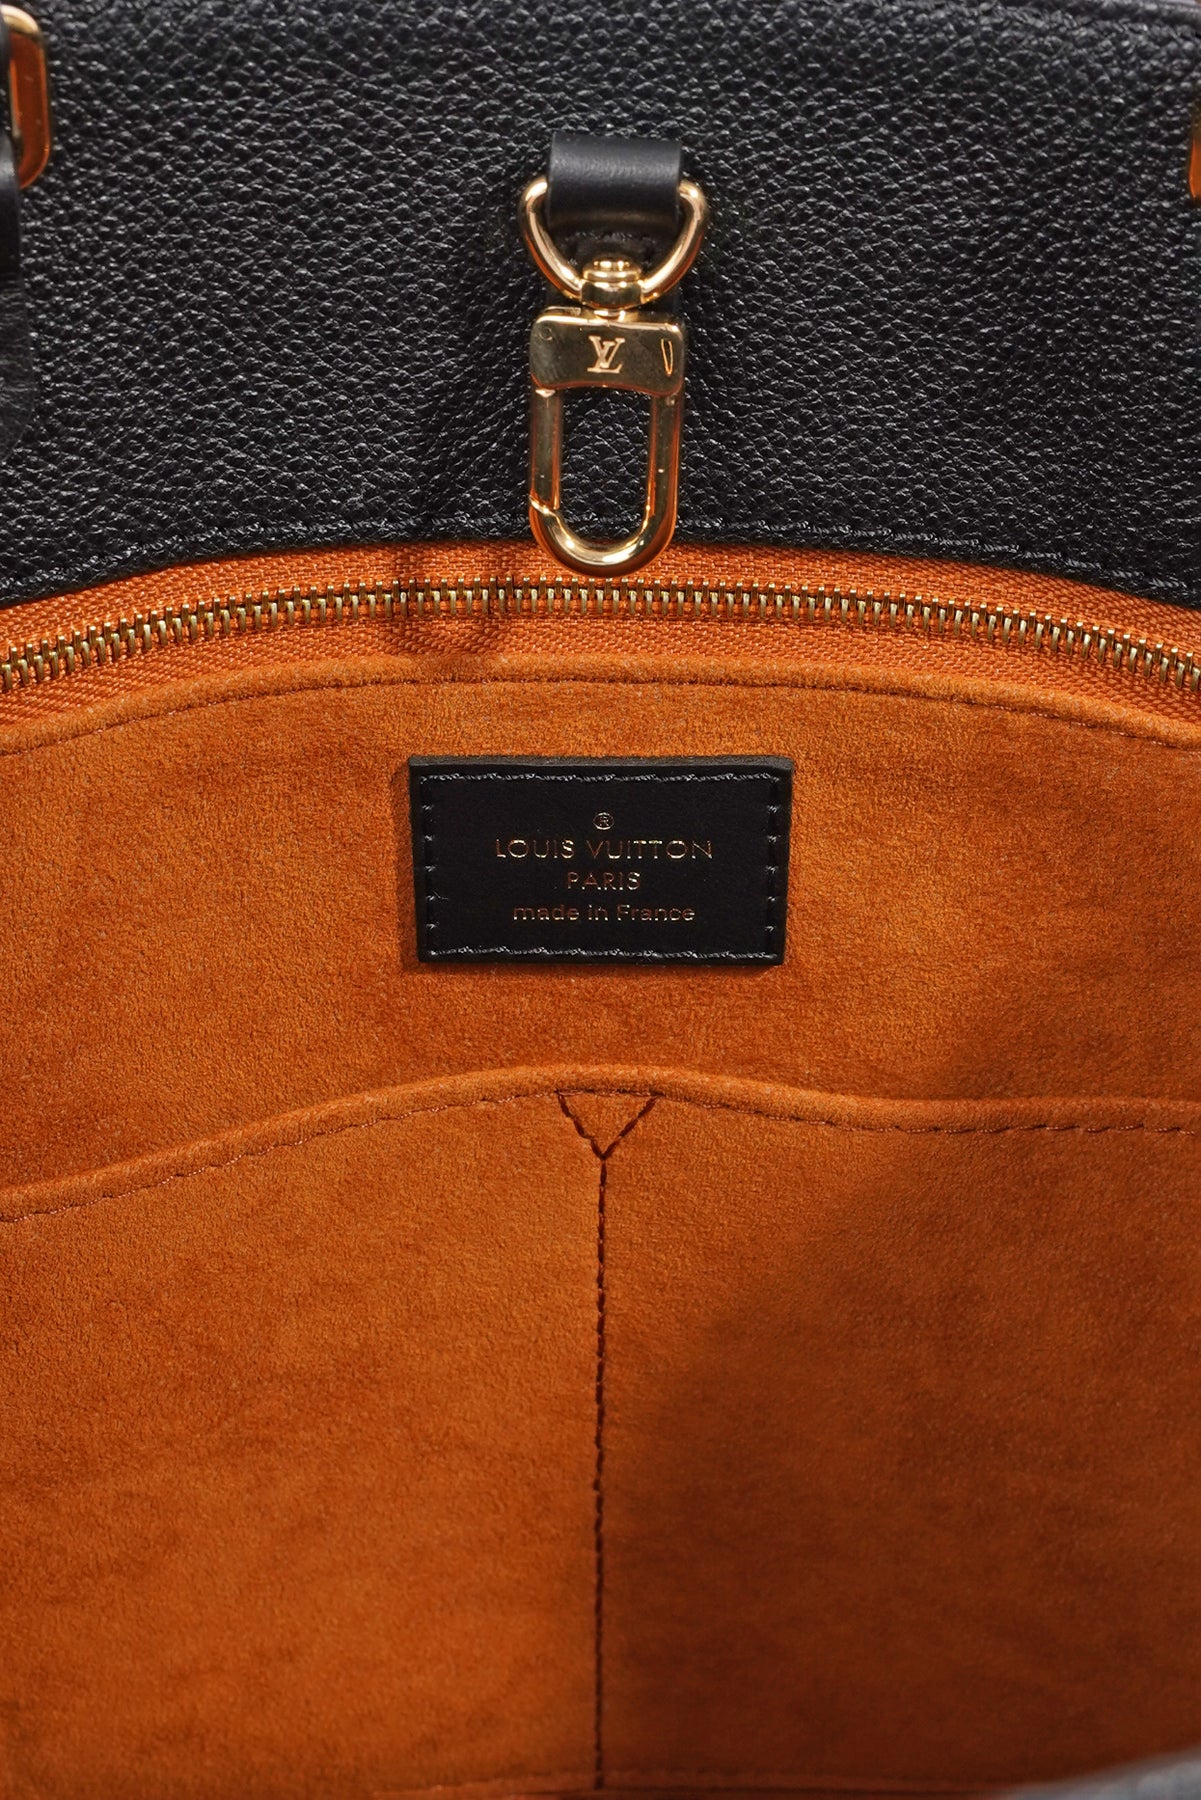 Ivory Judy Mm Louis Vuitton Bags, Dark Brown Fur Forever 21 Vests